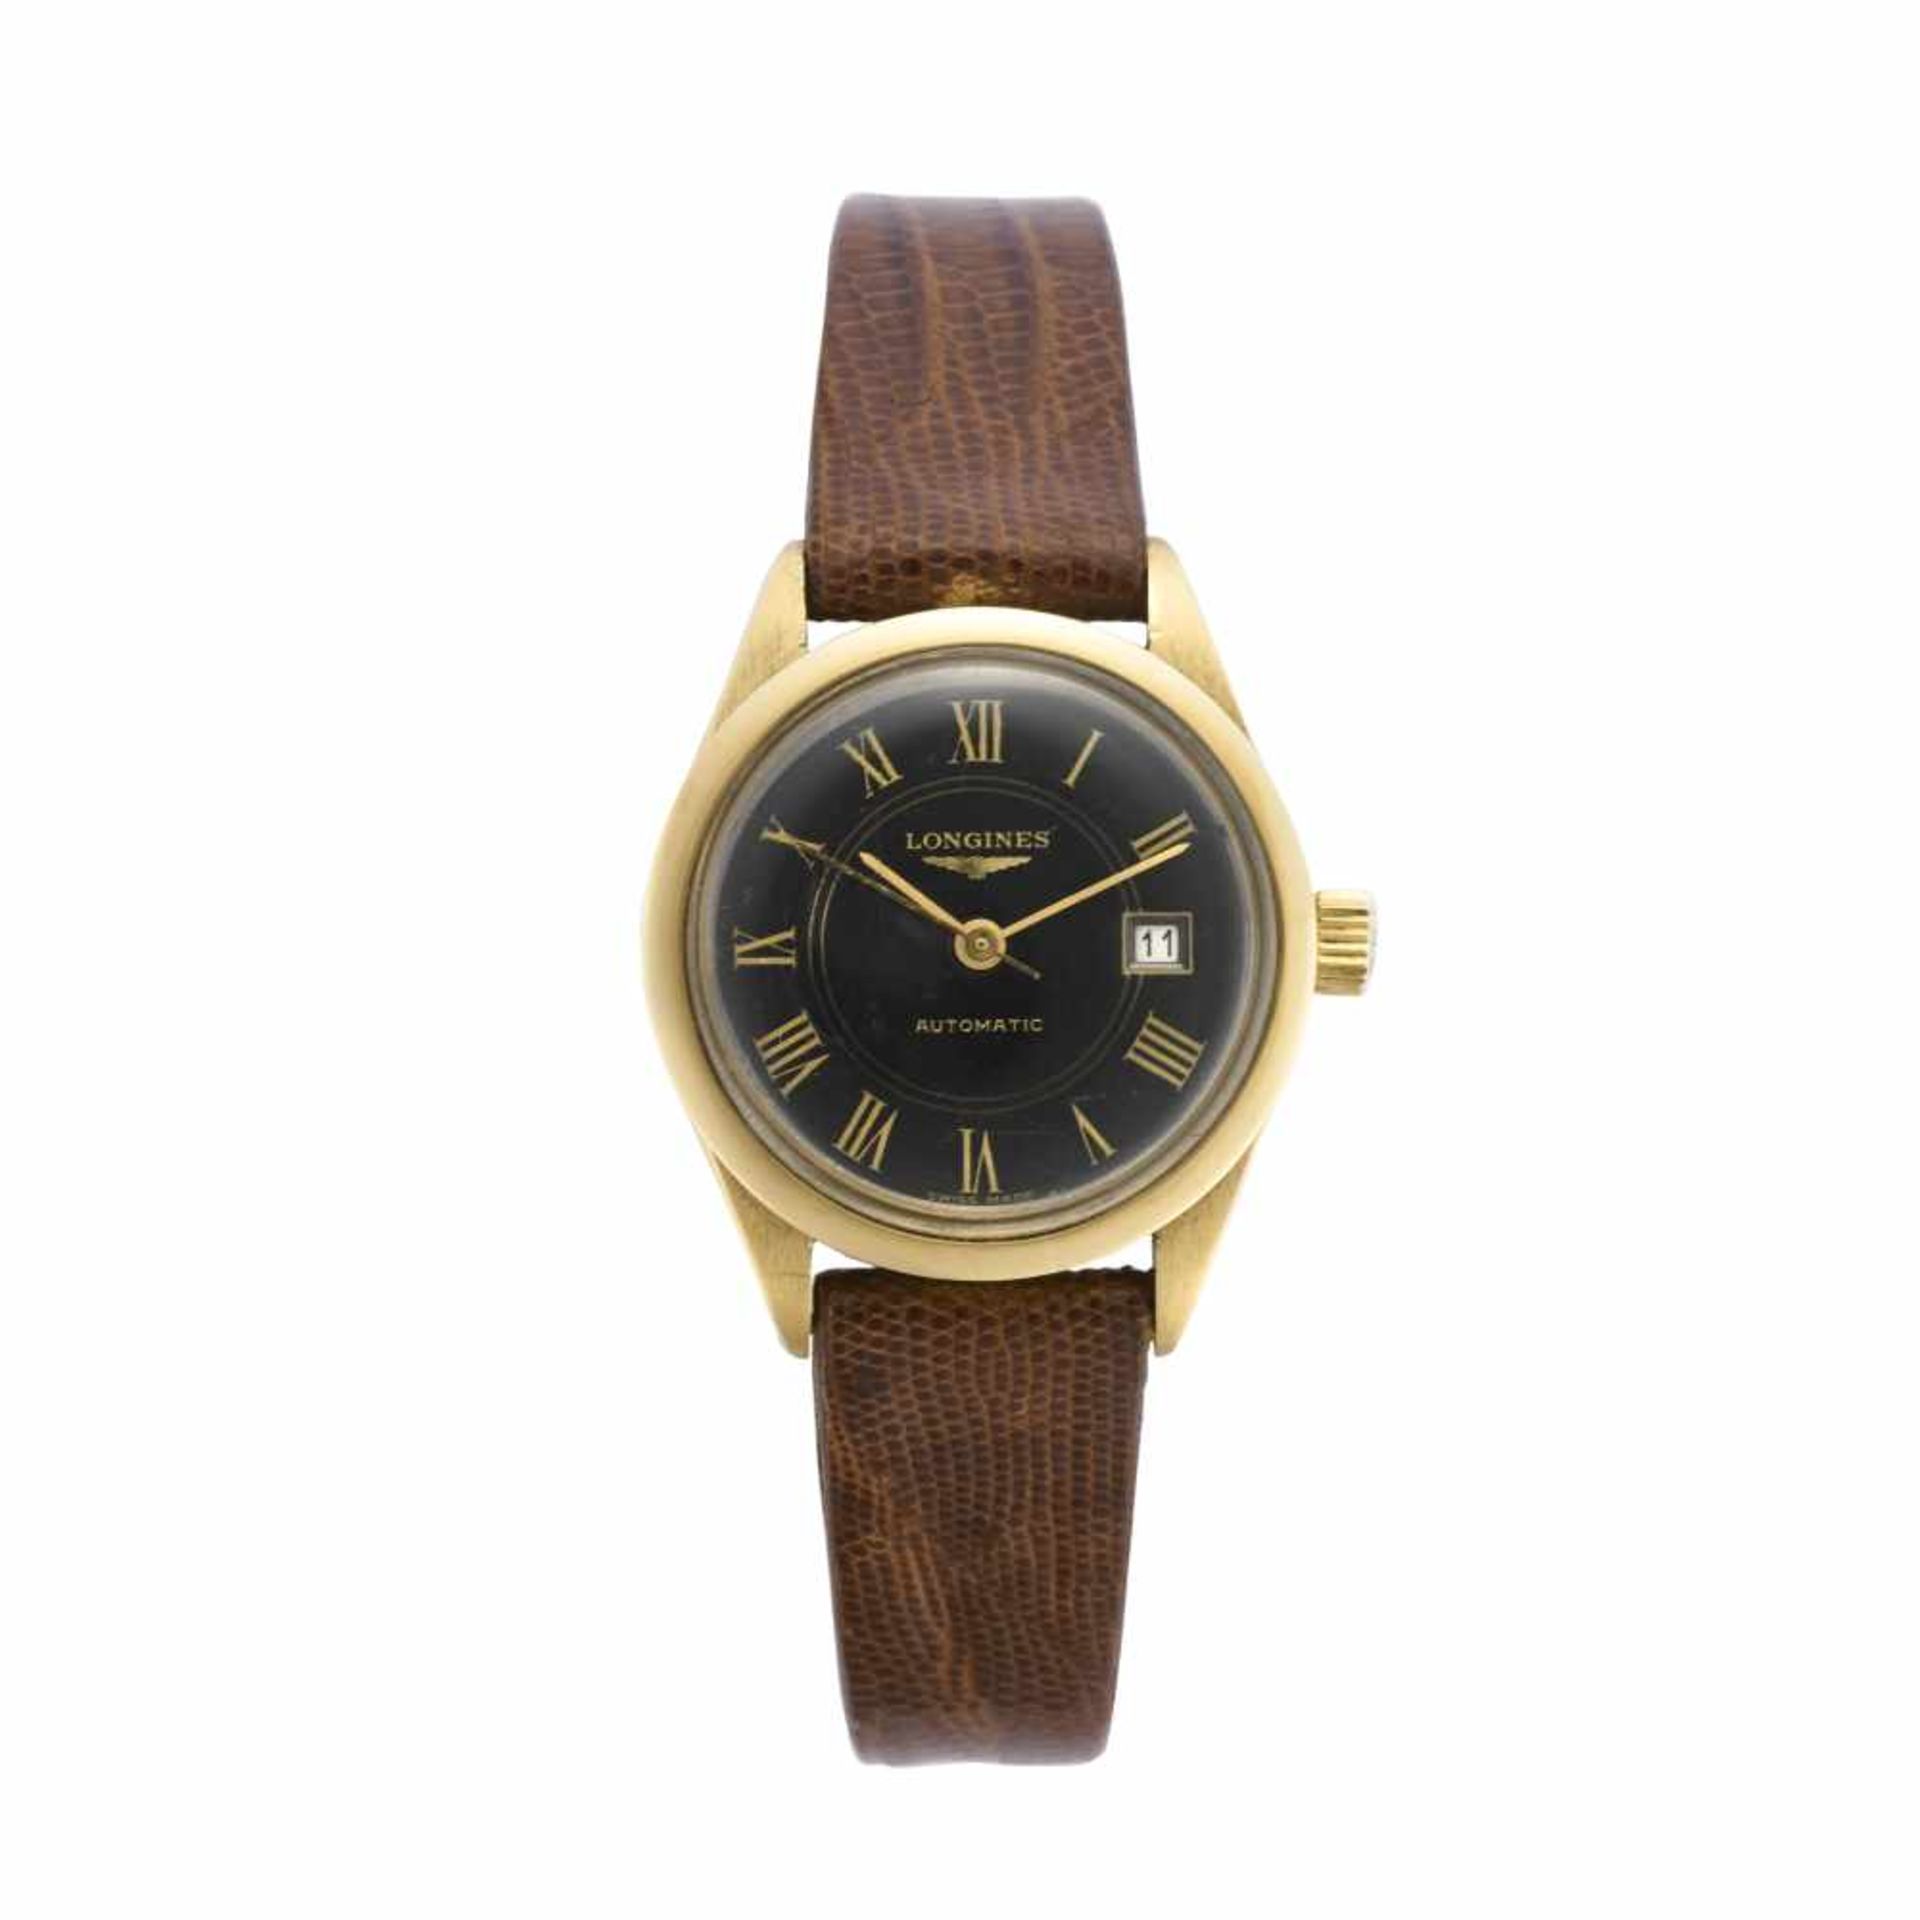 LONGINESLady's 18K gold wristwatch1970s/1980sDial signedAutomatic movementBlack dial with Roman